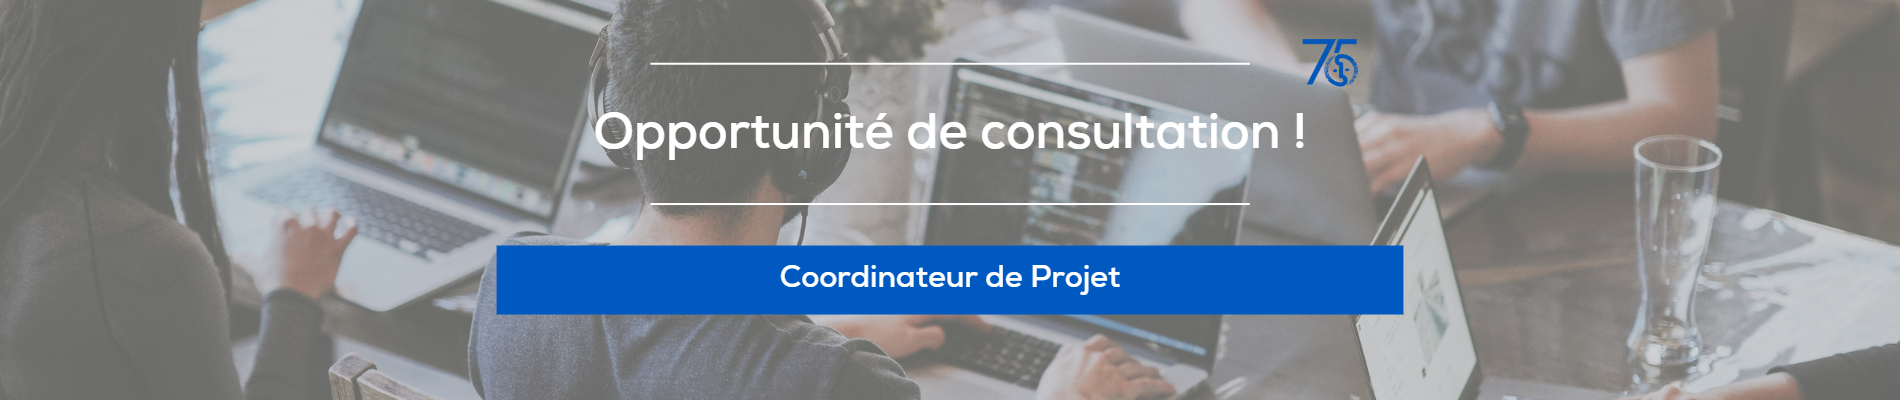 project_coordinator_1900x400_fr